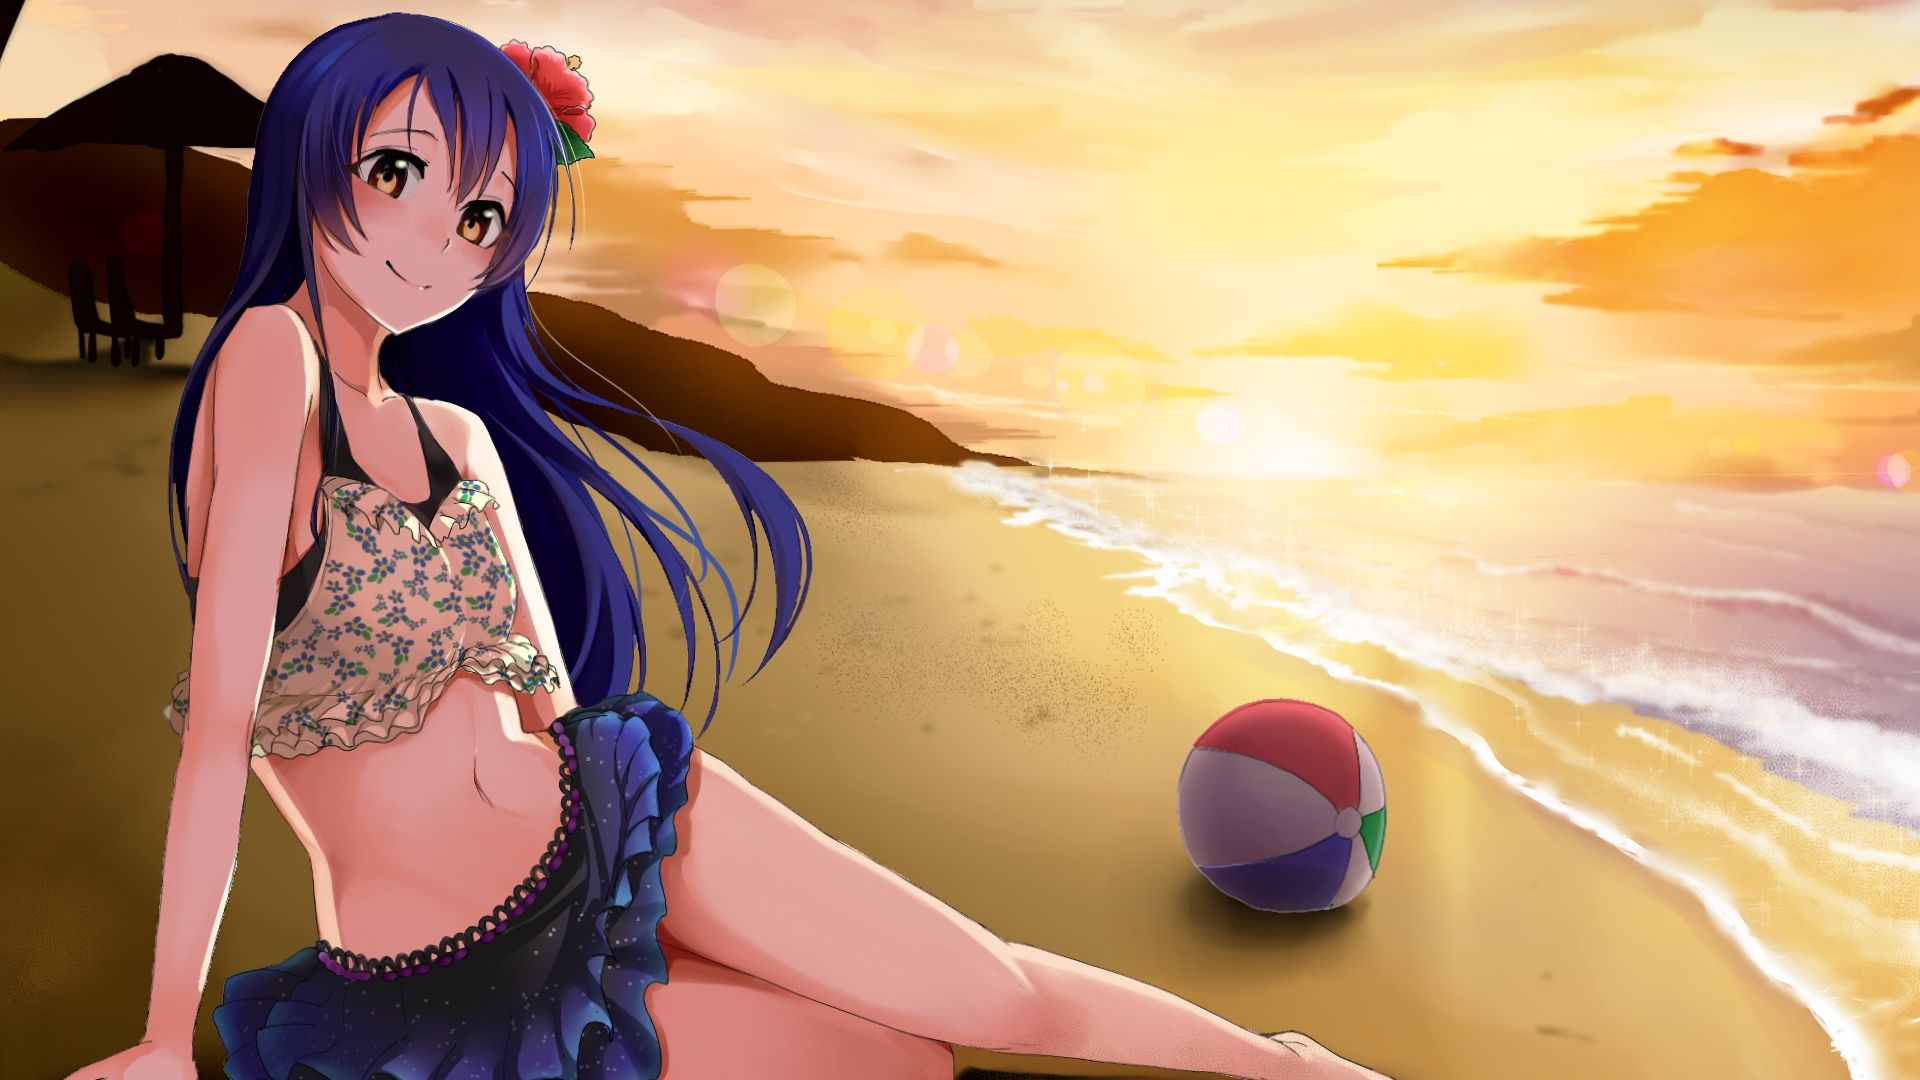 Wallpaper Blue hair anime girl, beach, ball, sunset